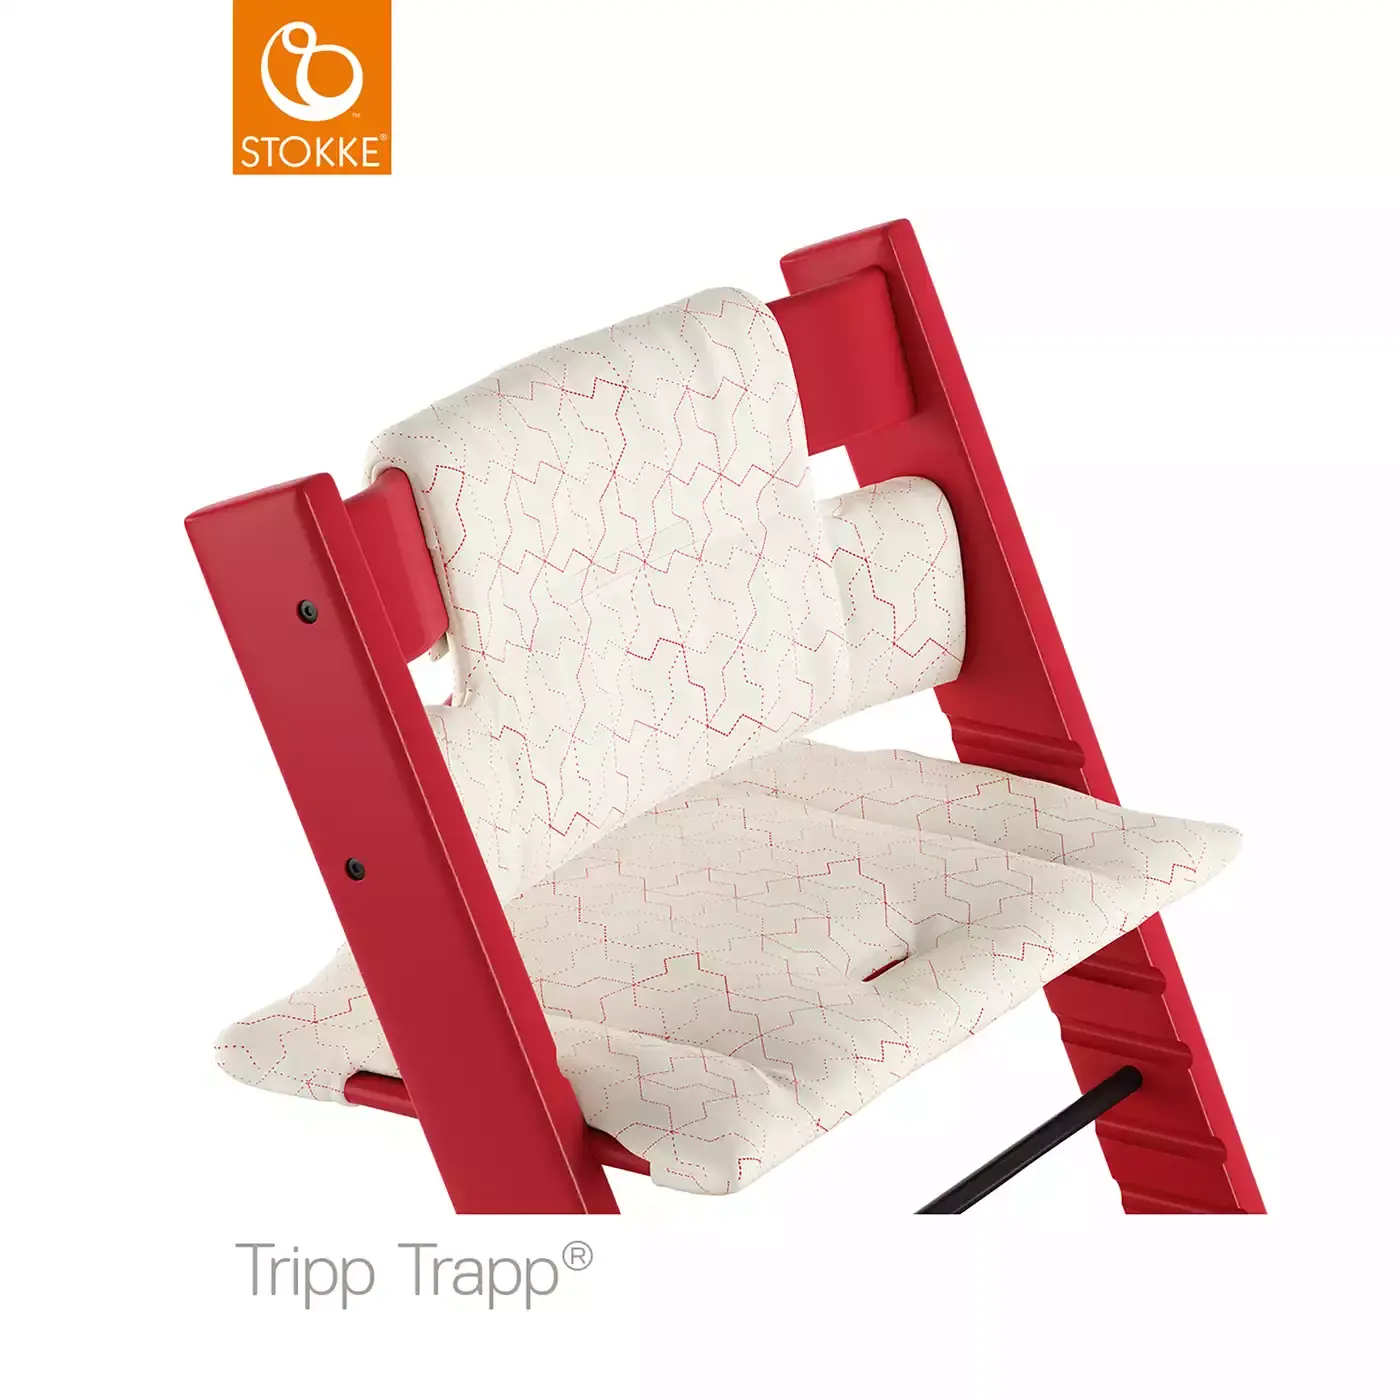 Tripp Trapp® Classic Kissen Geometric Red STOKKE 2000575885901 3